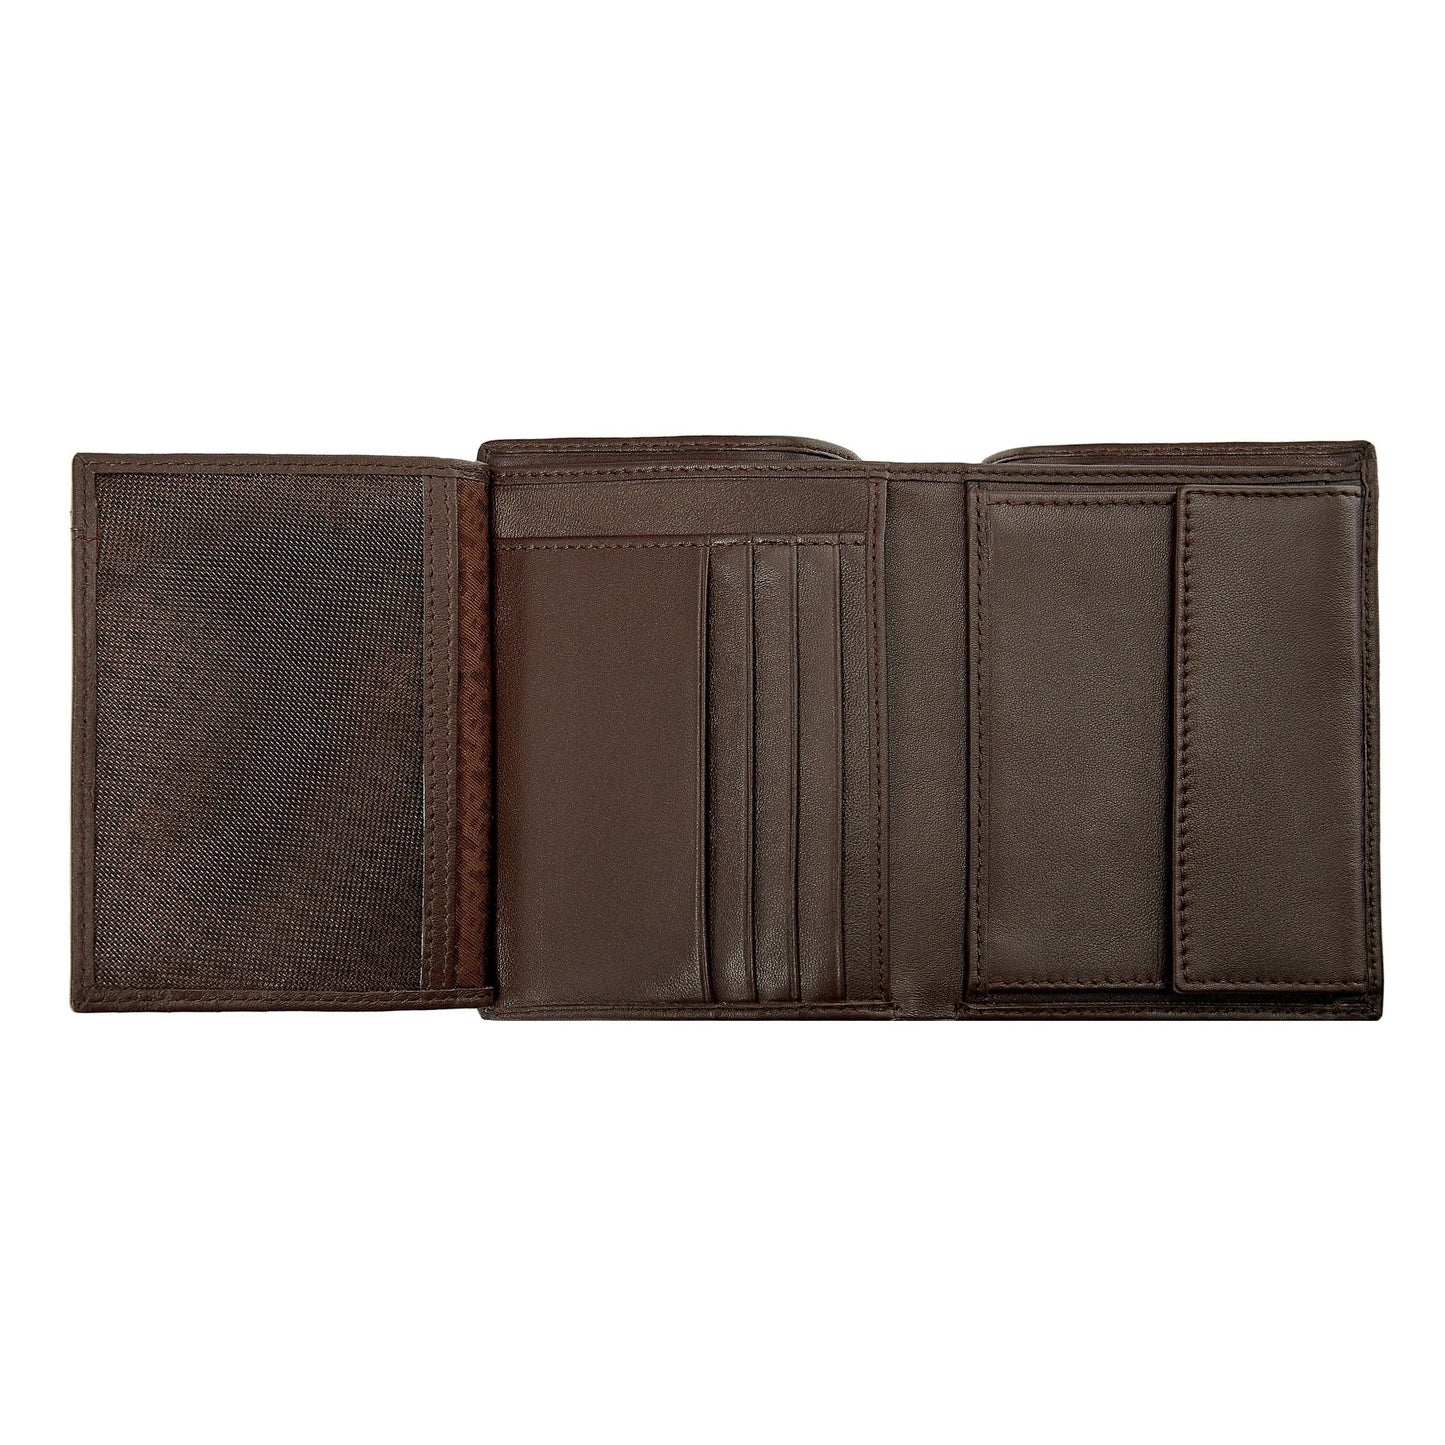 HUGO BOSS HLO403Y Πορτοφόλι Vertical Flap Classic Smooth Brown Wallet